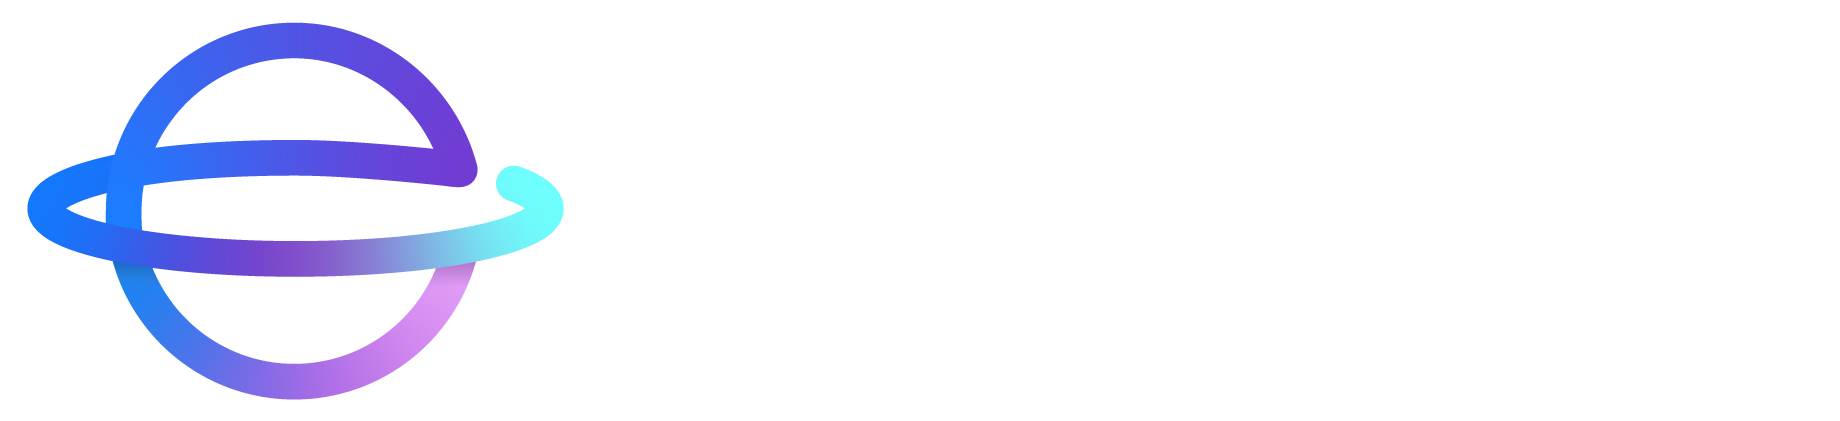 Corbital Technologies LLP